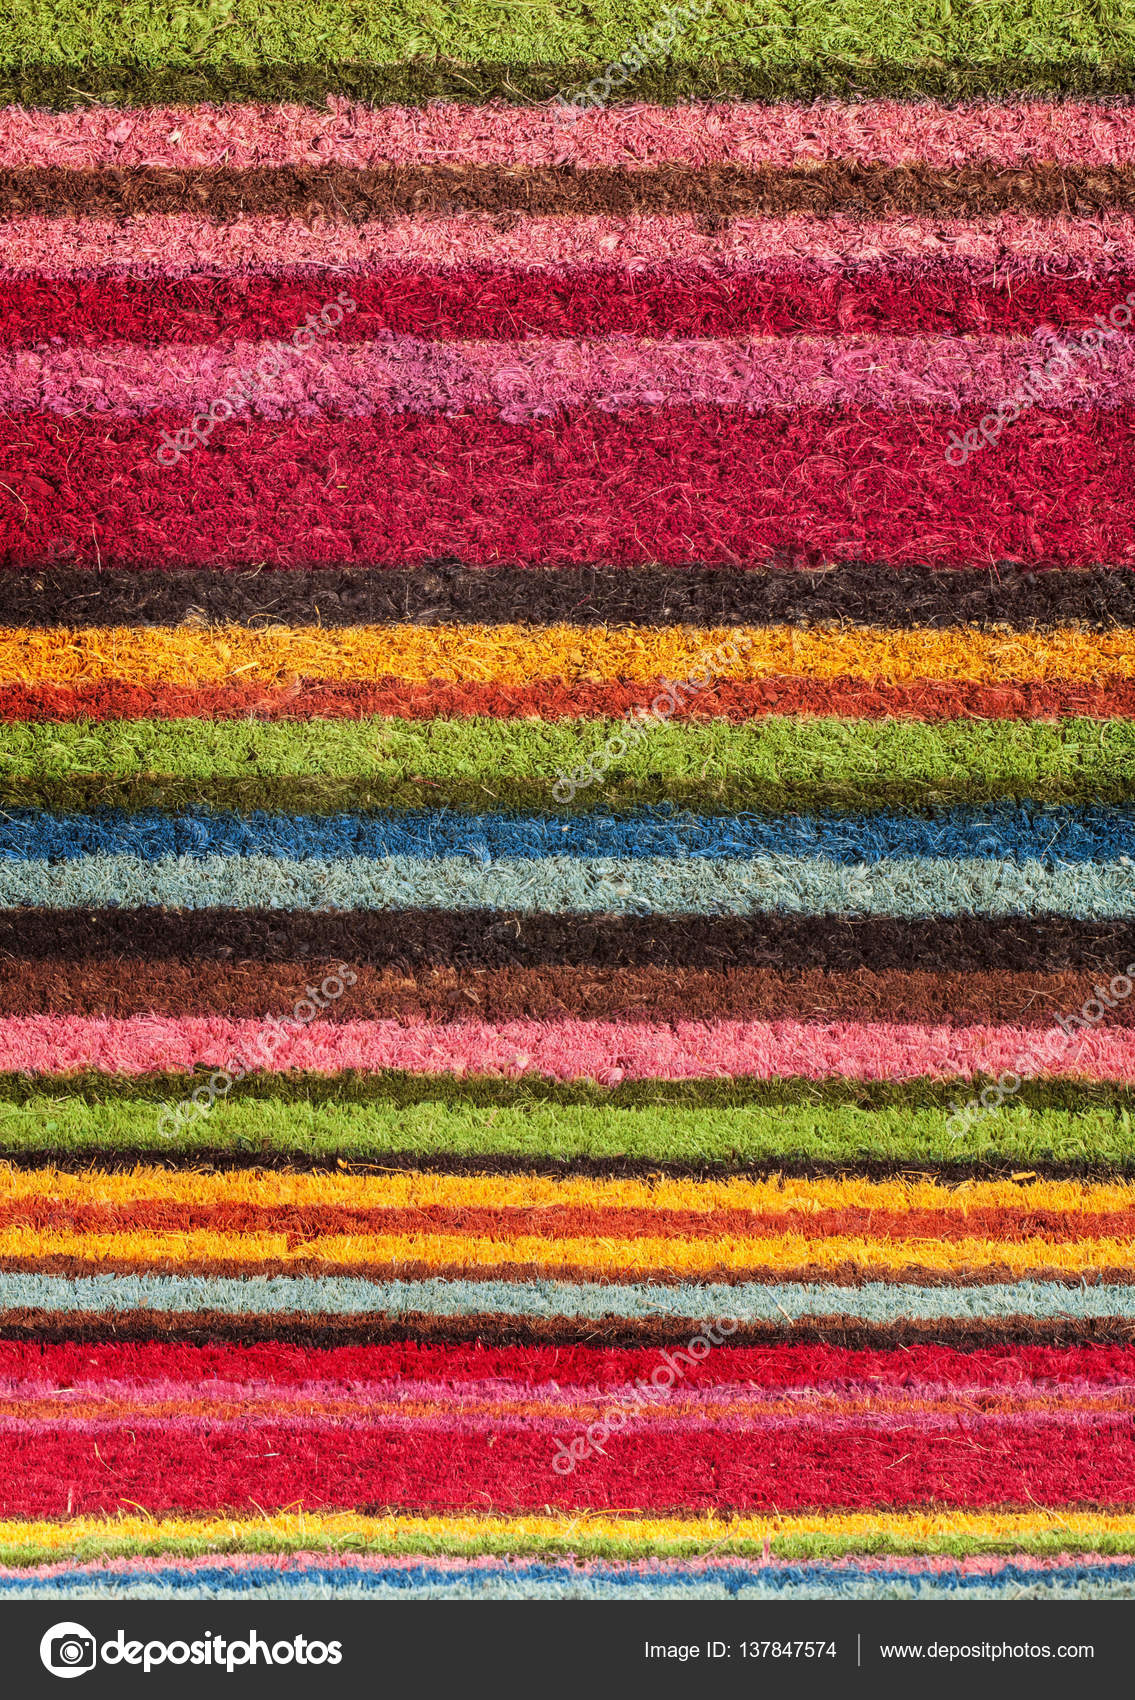 Depositphotos 137847574 Stock Photo Multi Colored Striped Carpet 